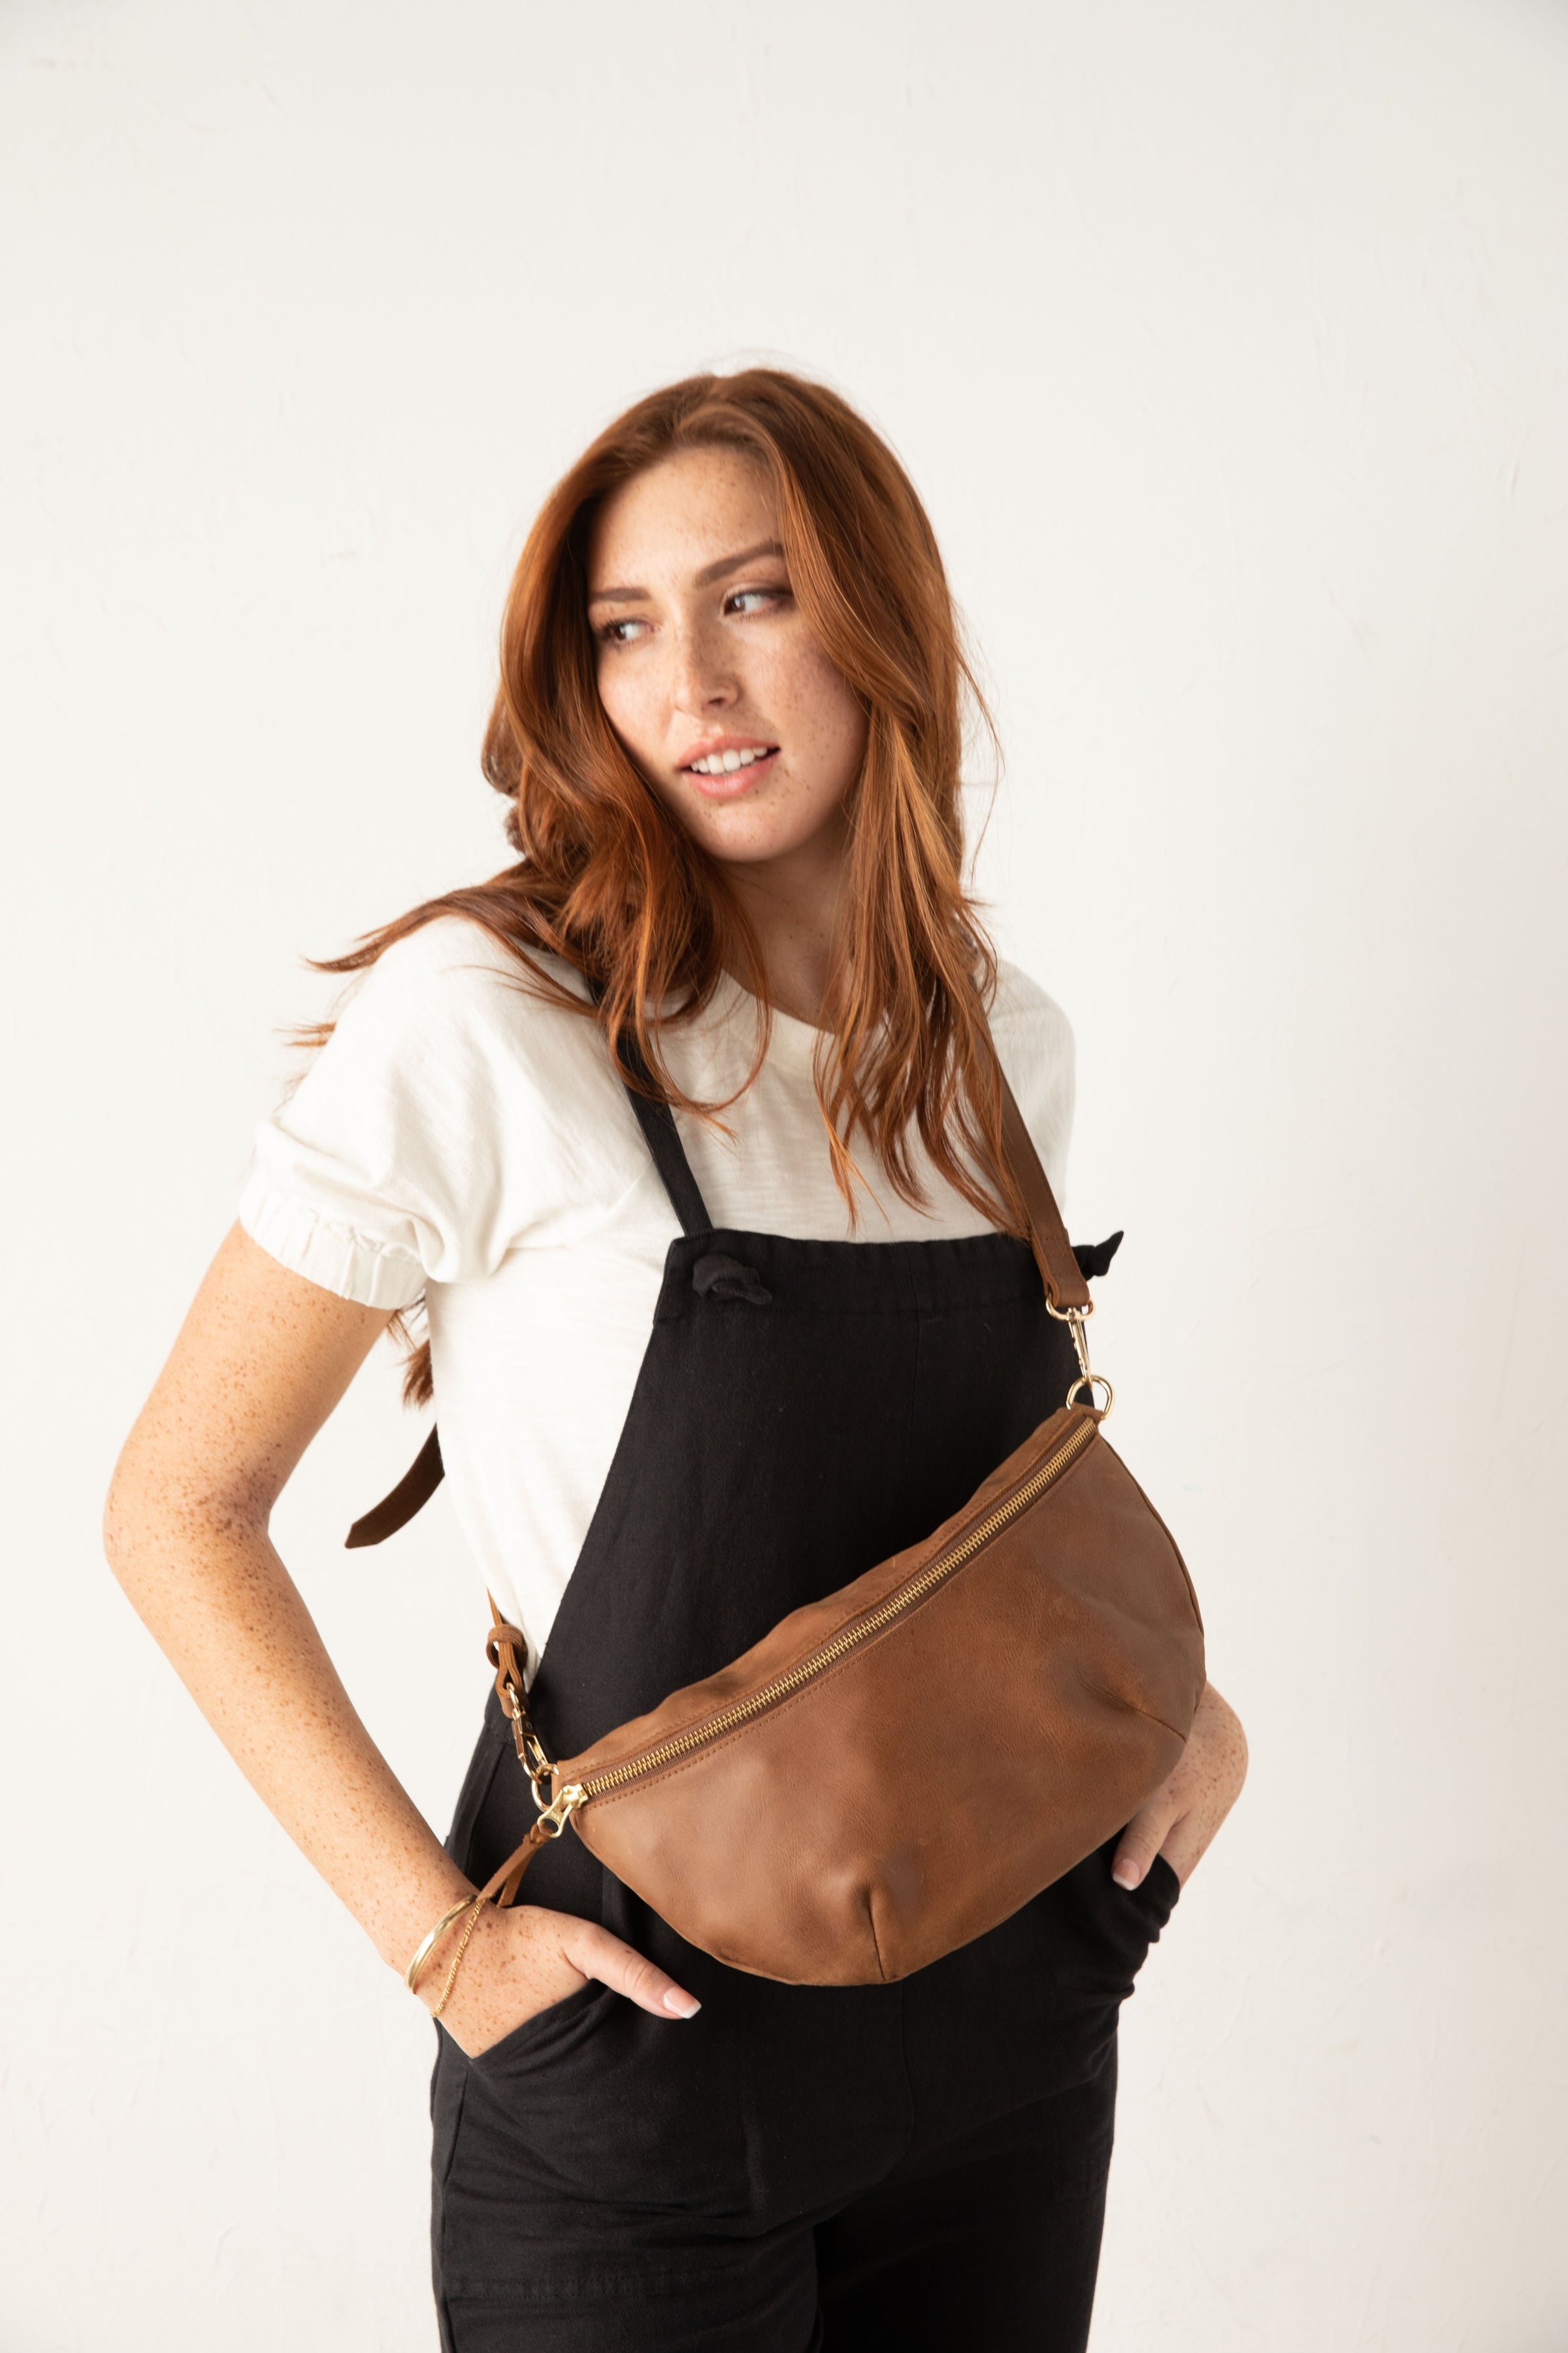 Amazon.com | CLUCI Belt Bag Bundle with Fanny Pack for Women | Waist Packs